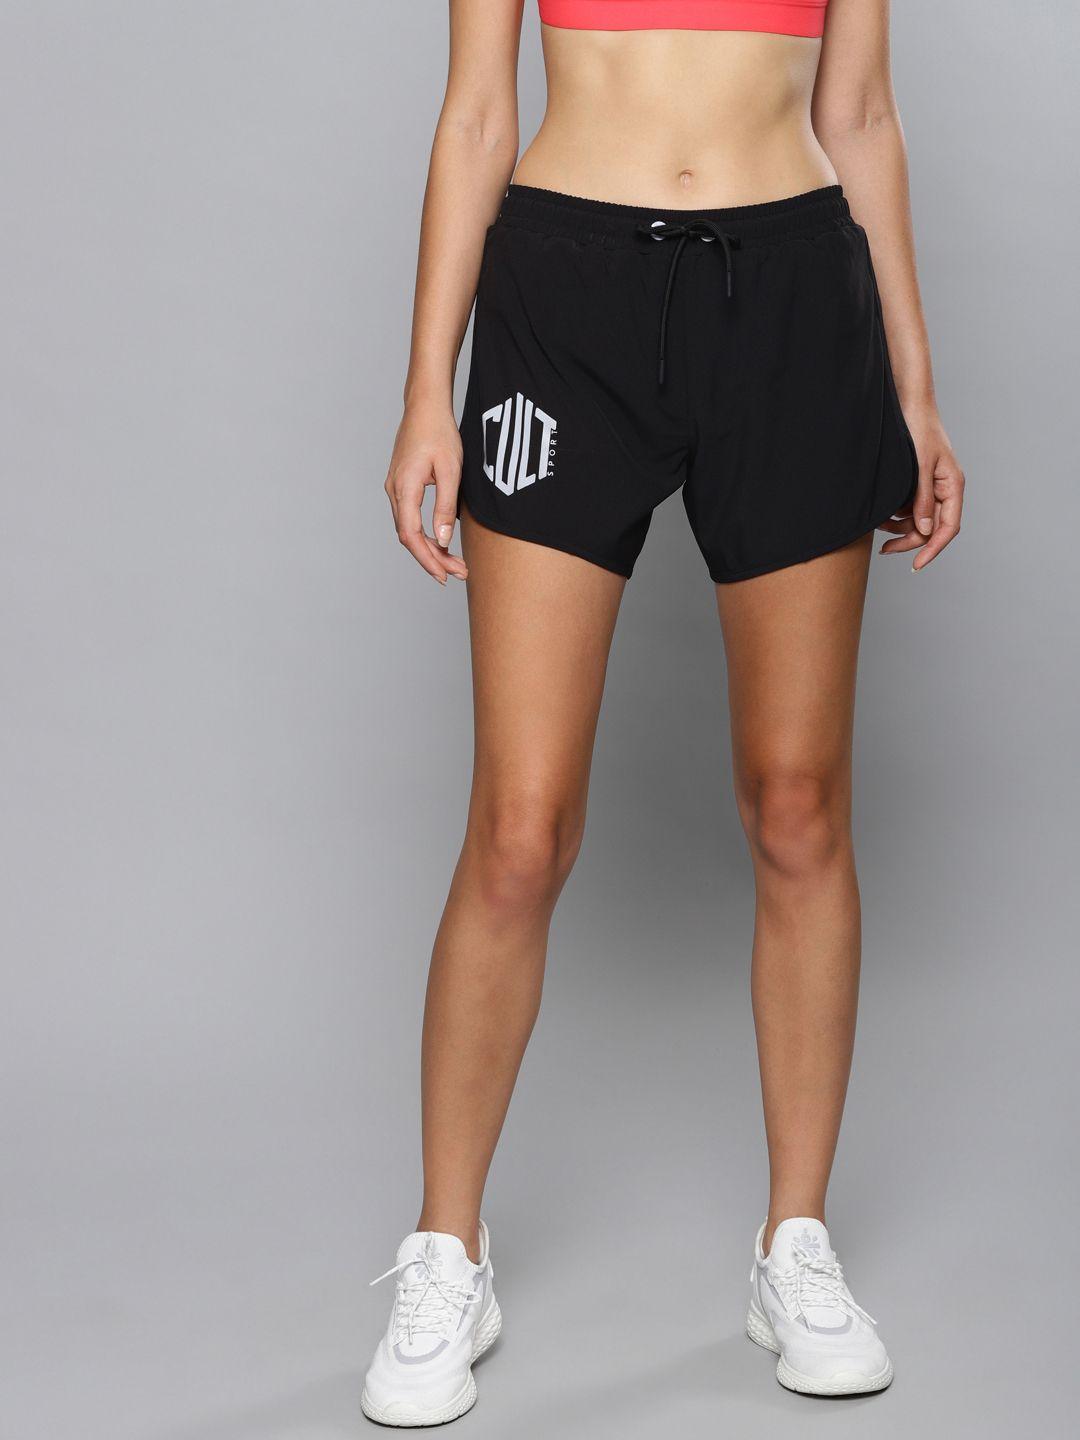 cultsport women black solid fly dry regular fit sports running shorts